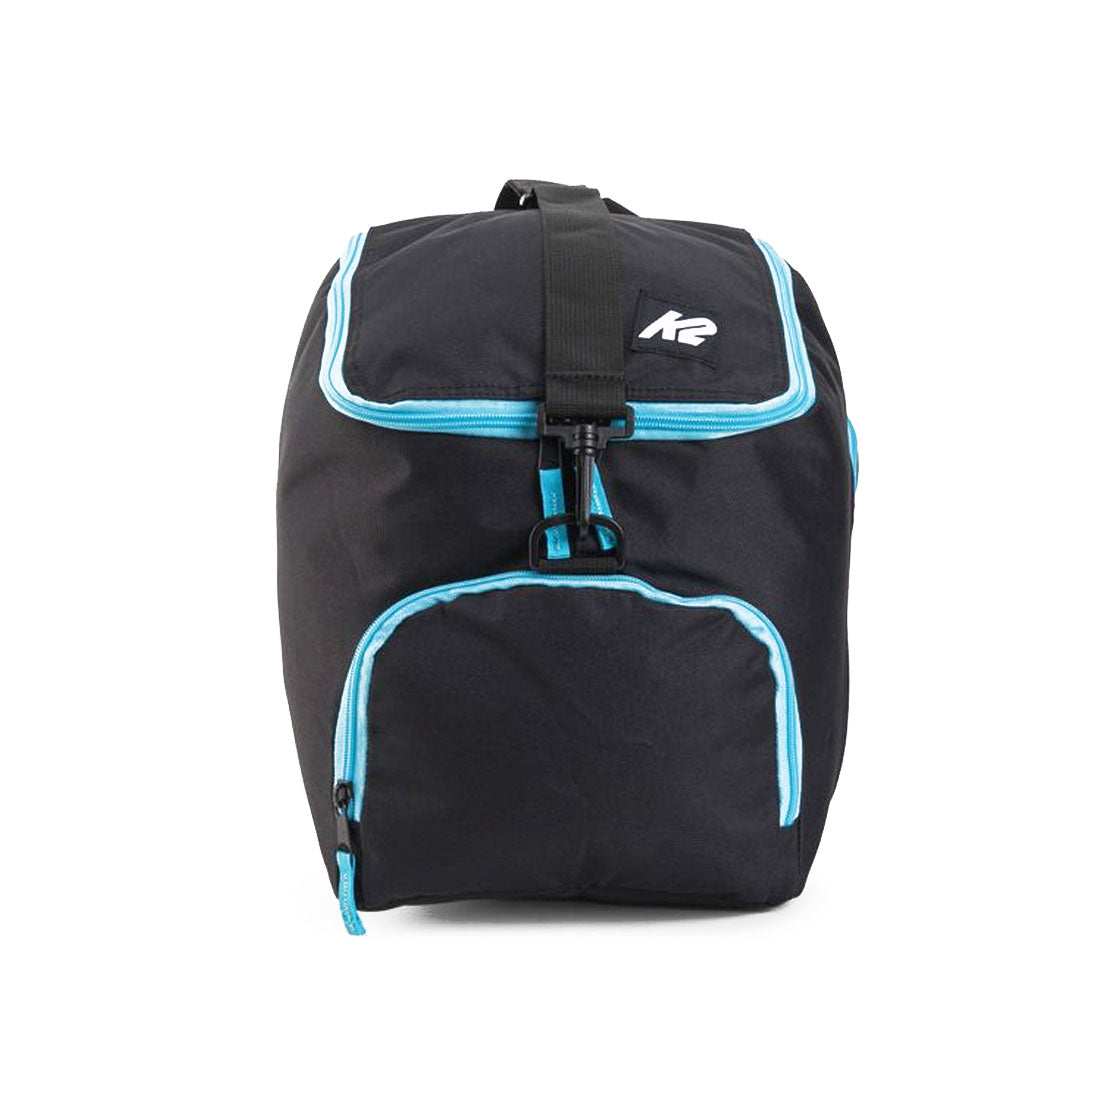 K2 Alliance Carrier - Blue/Black Bags and Backpacks